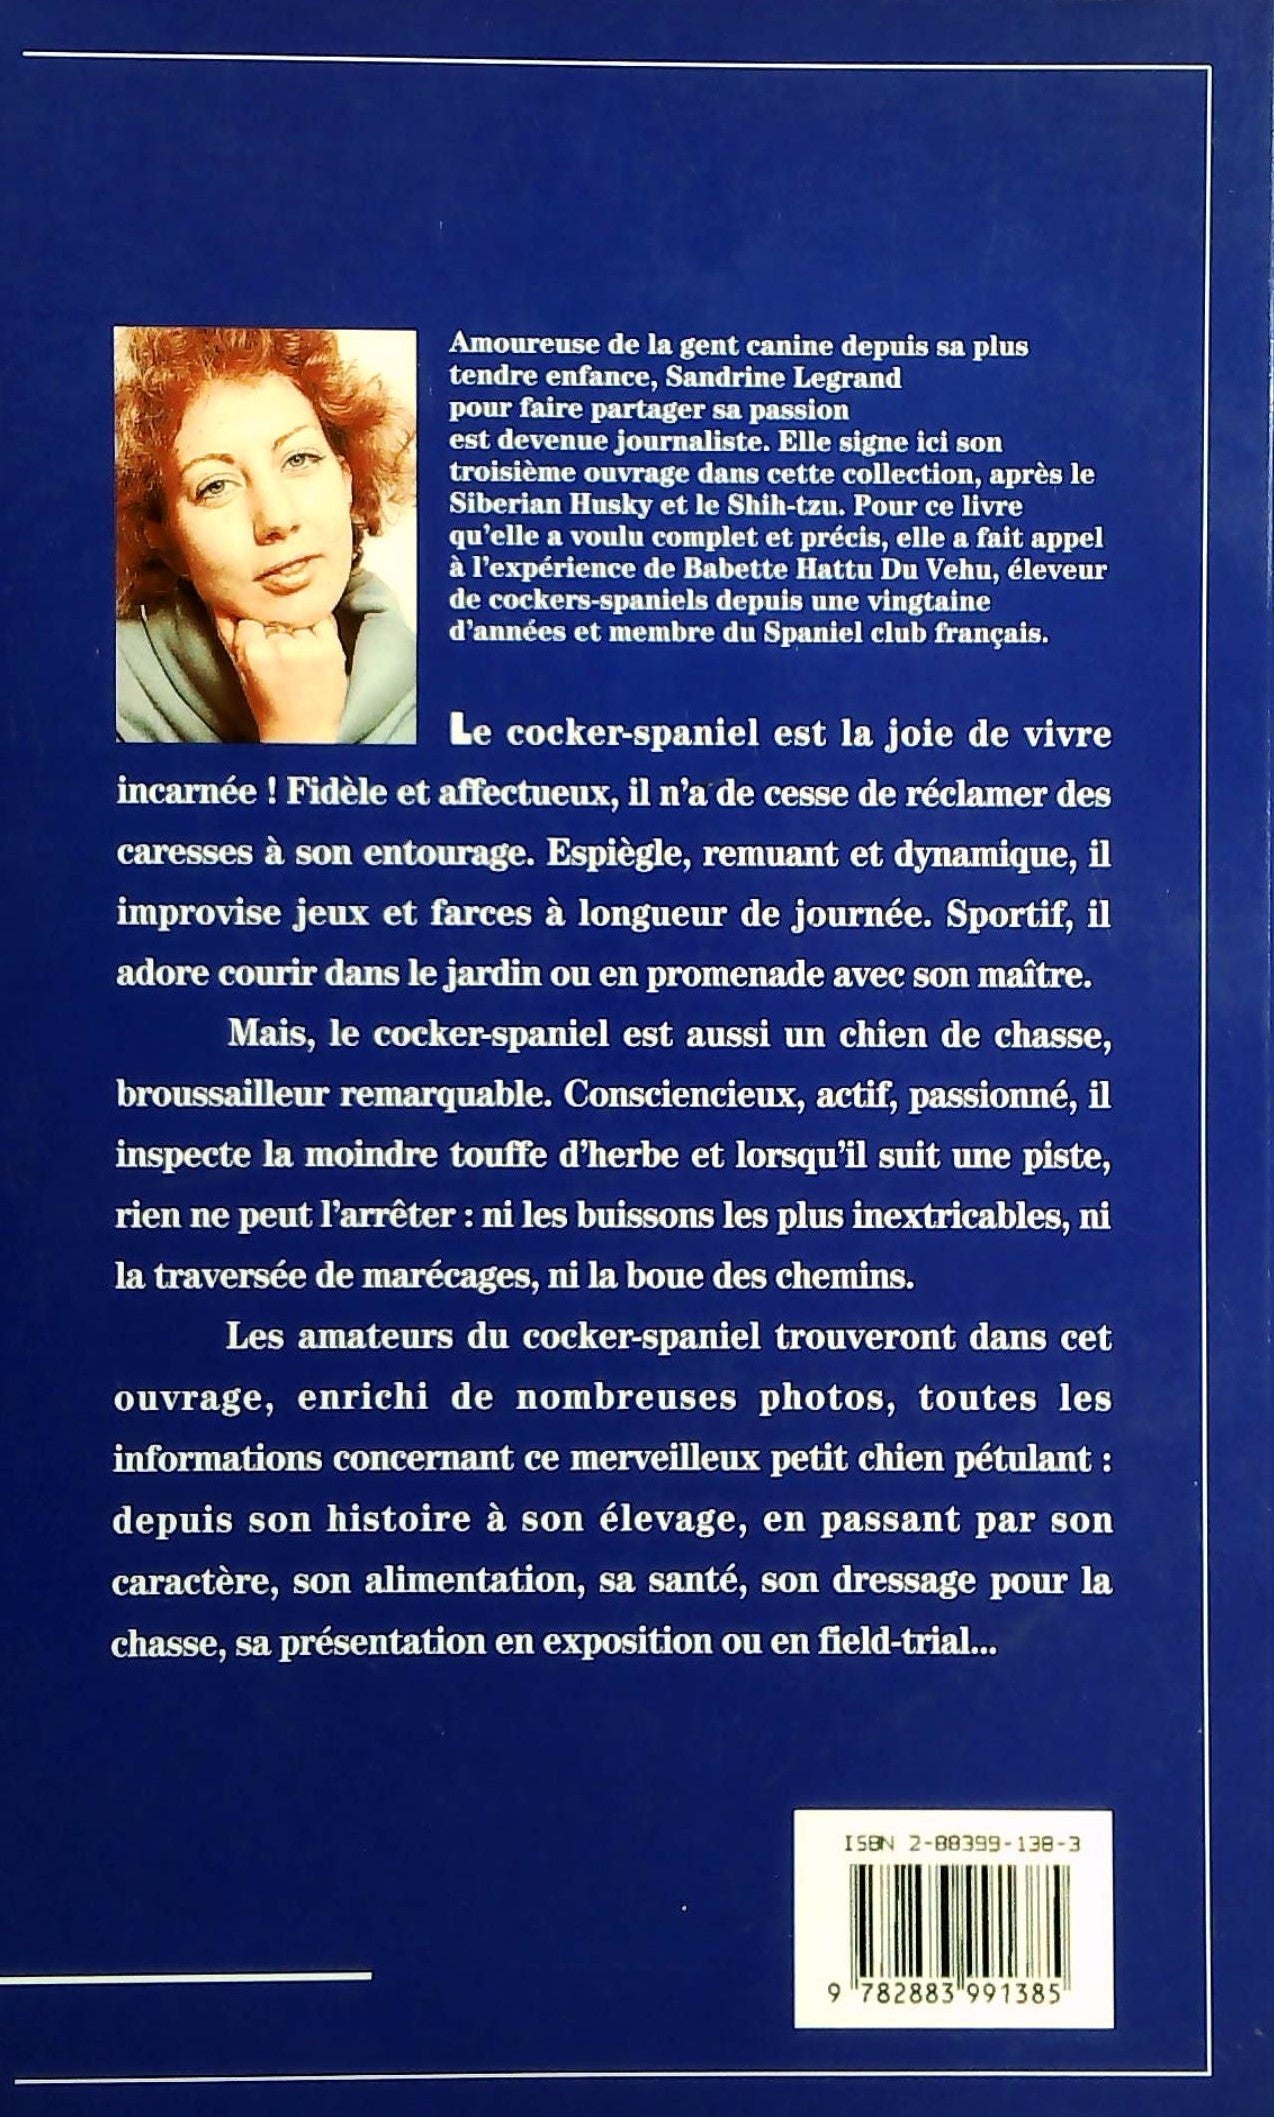 Le cocker-spaniel (Sandrine Legrand)